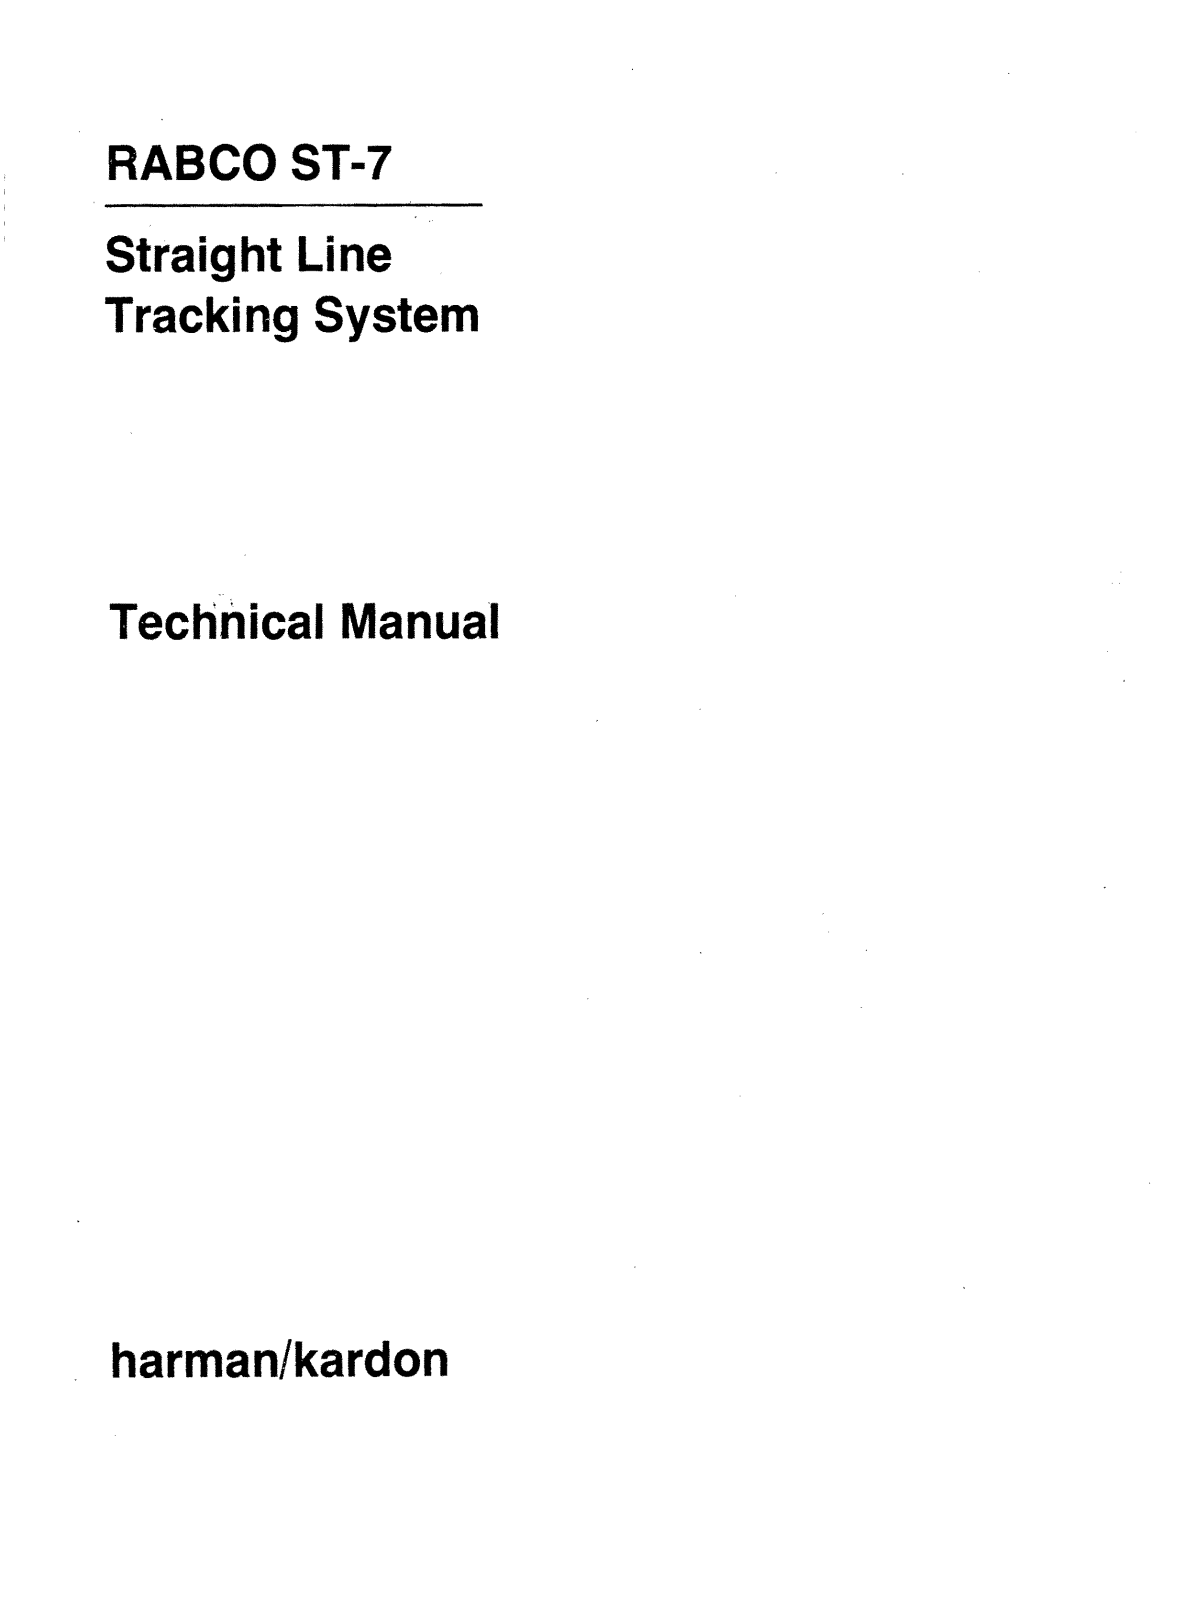 Harman Kardon ST-7-RABCO Service Manual